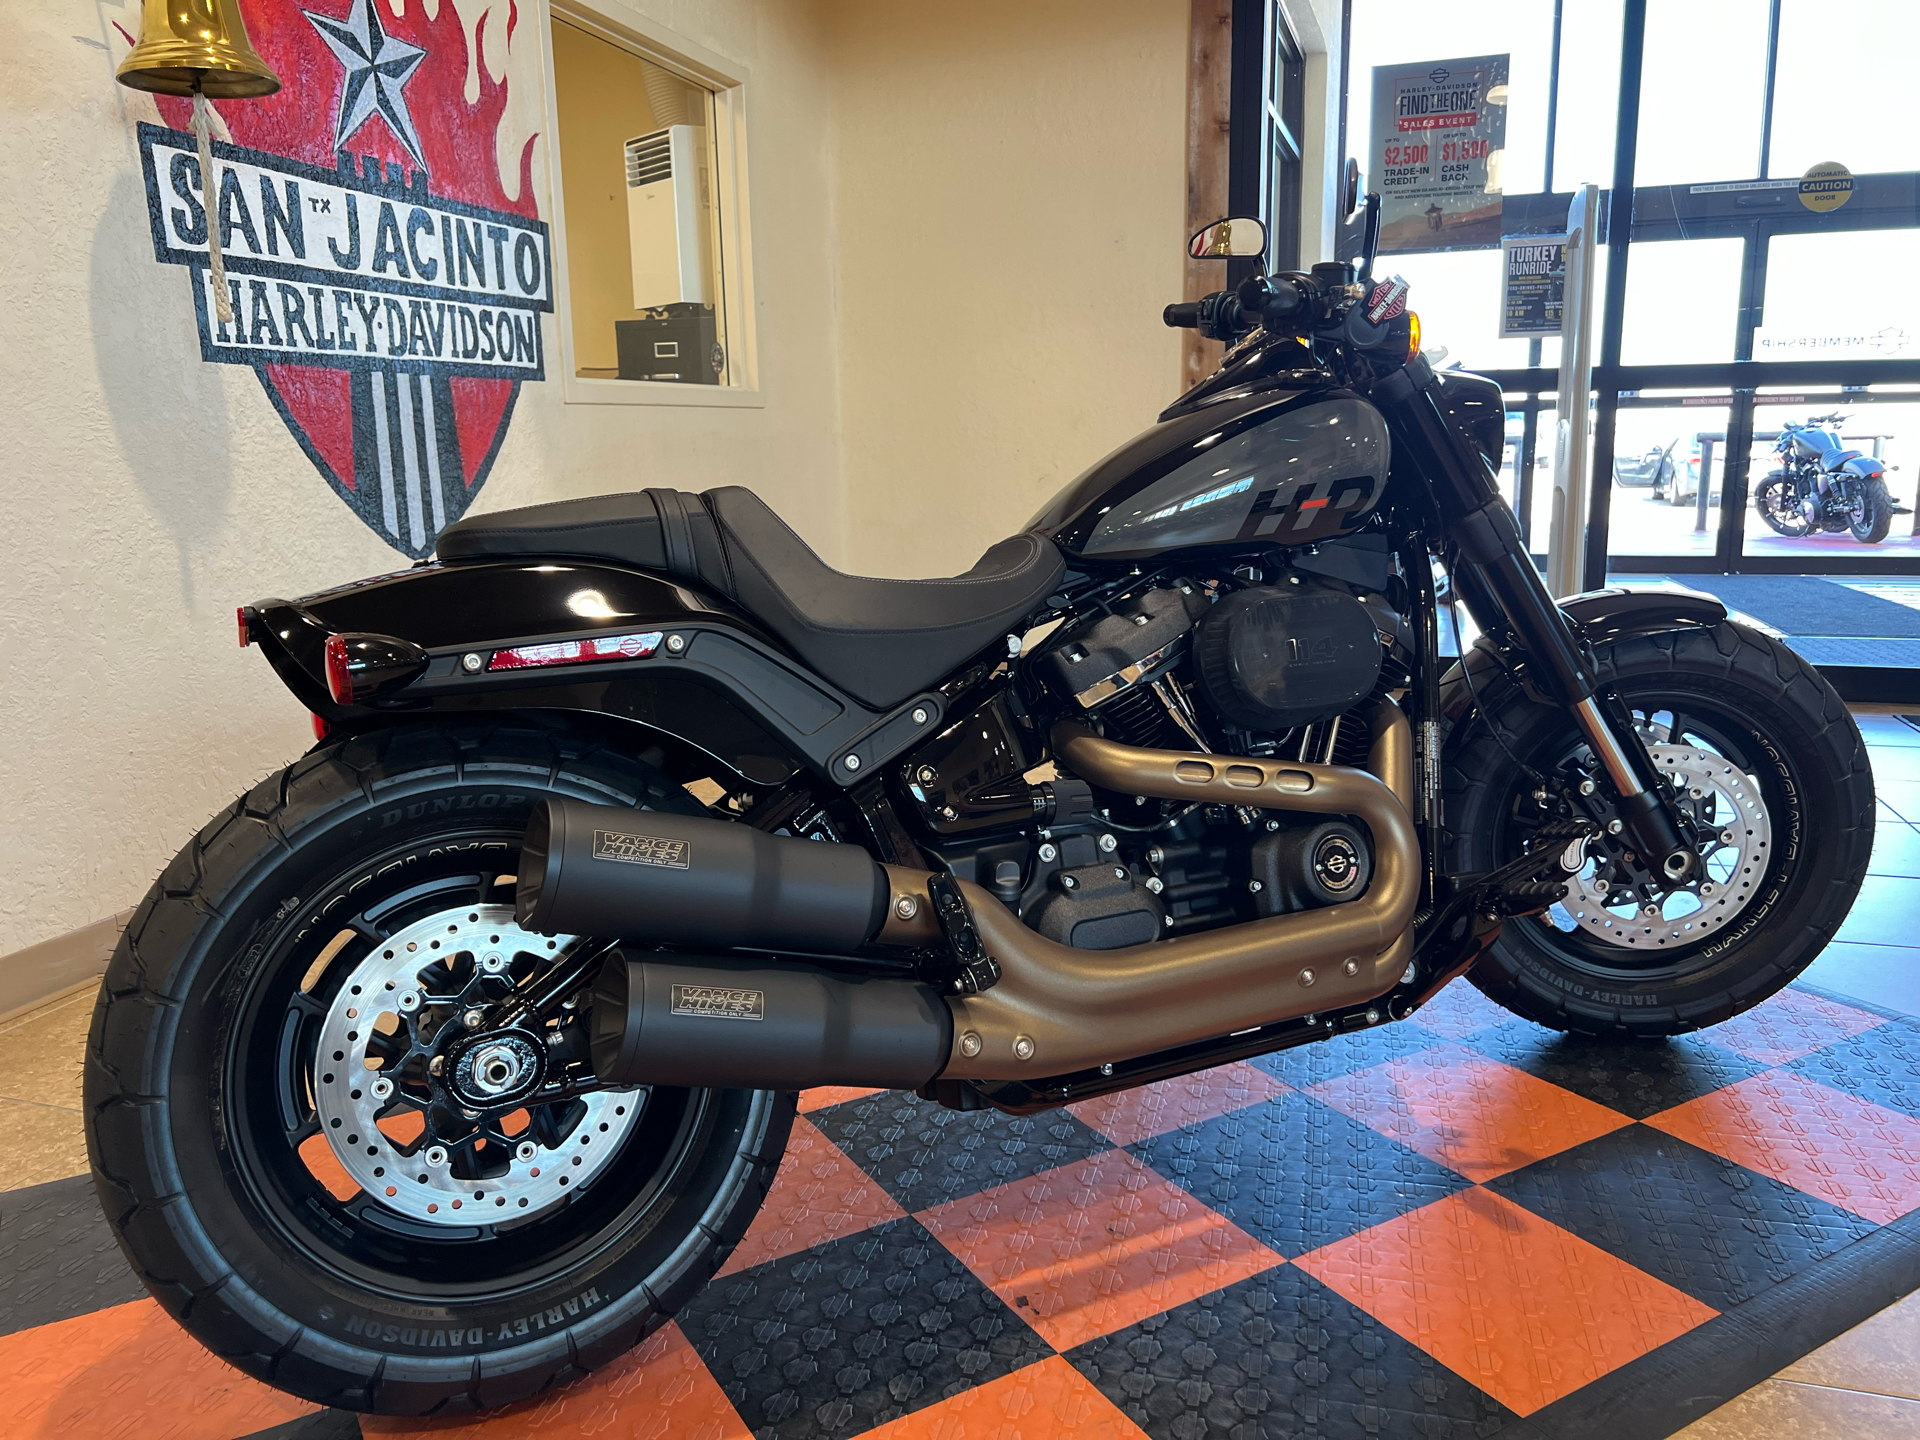 2022 Harley-Davidson Fat Bob® 114 in Pasadena, Texas - Photo 3